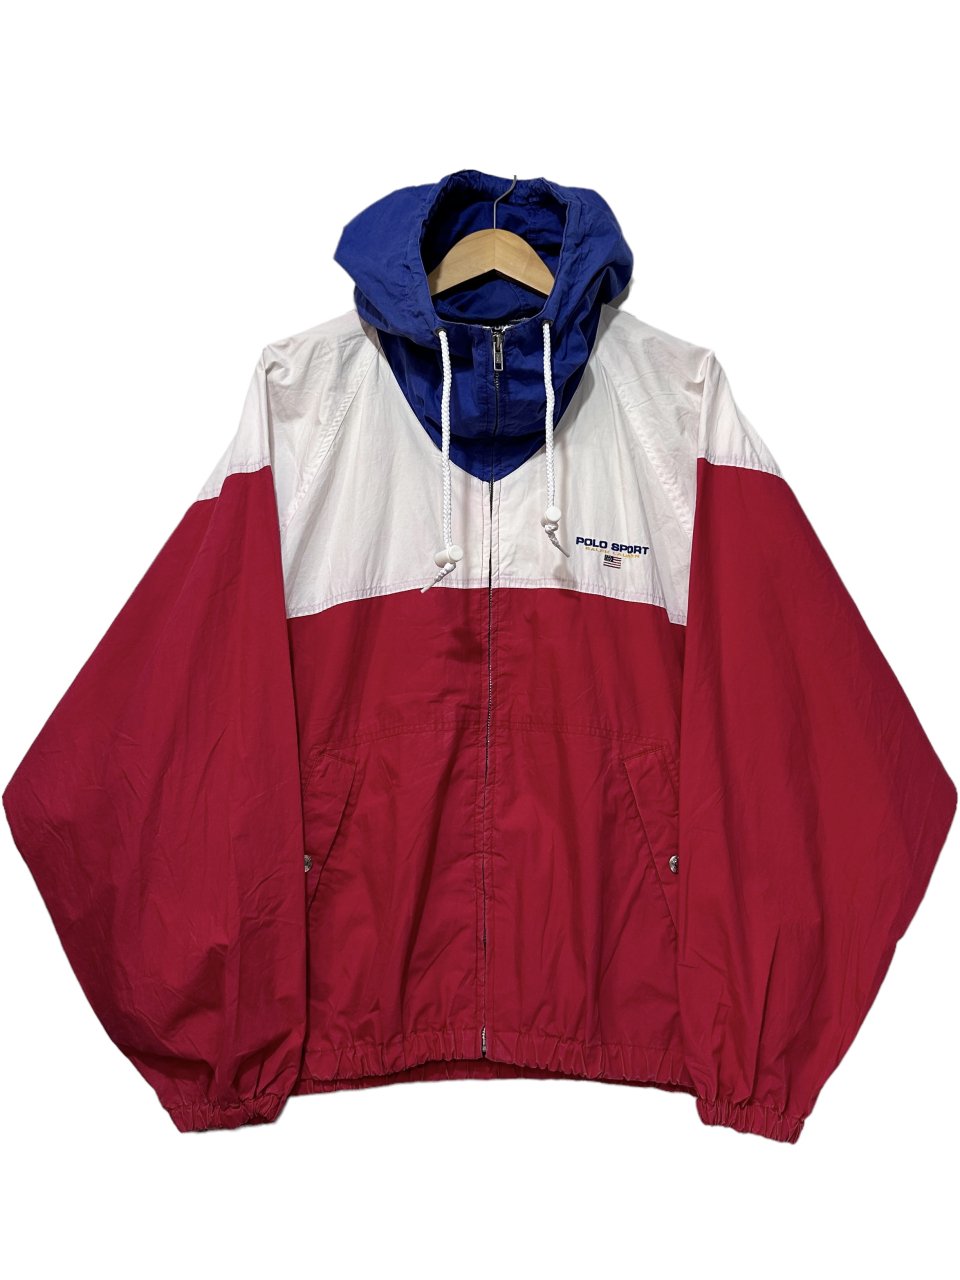 90s POLO SPORT cotton zip jacket